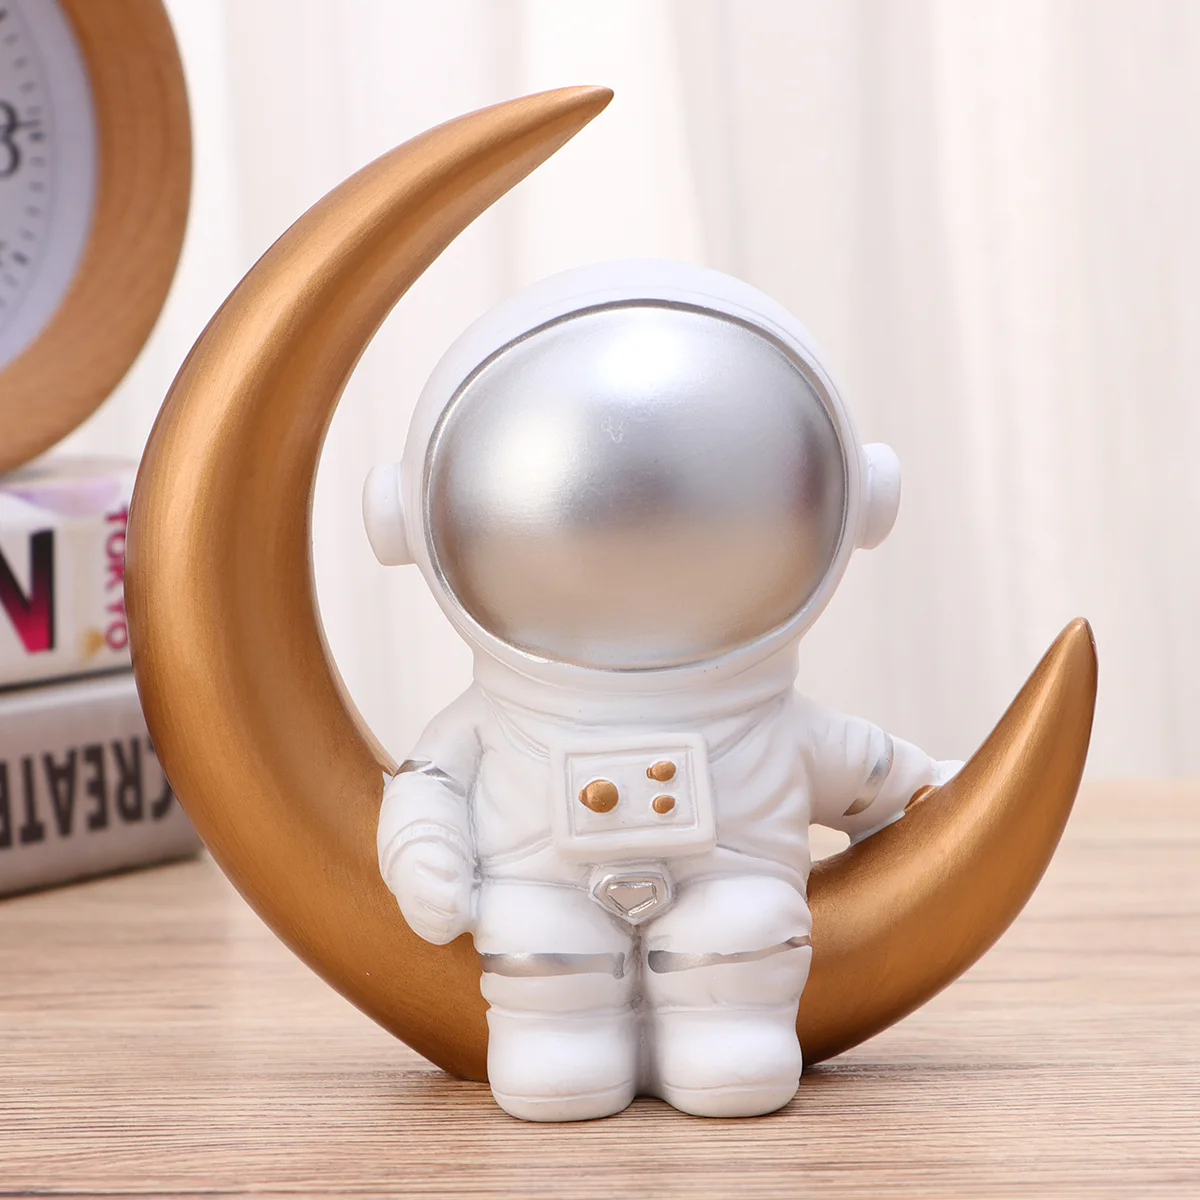 

Astronaut Ornament Cake Resin Figurine Toy Figure Spaceman Model Decoration Sculpture Moon Decor Table Party Car Statues Space